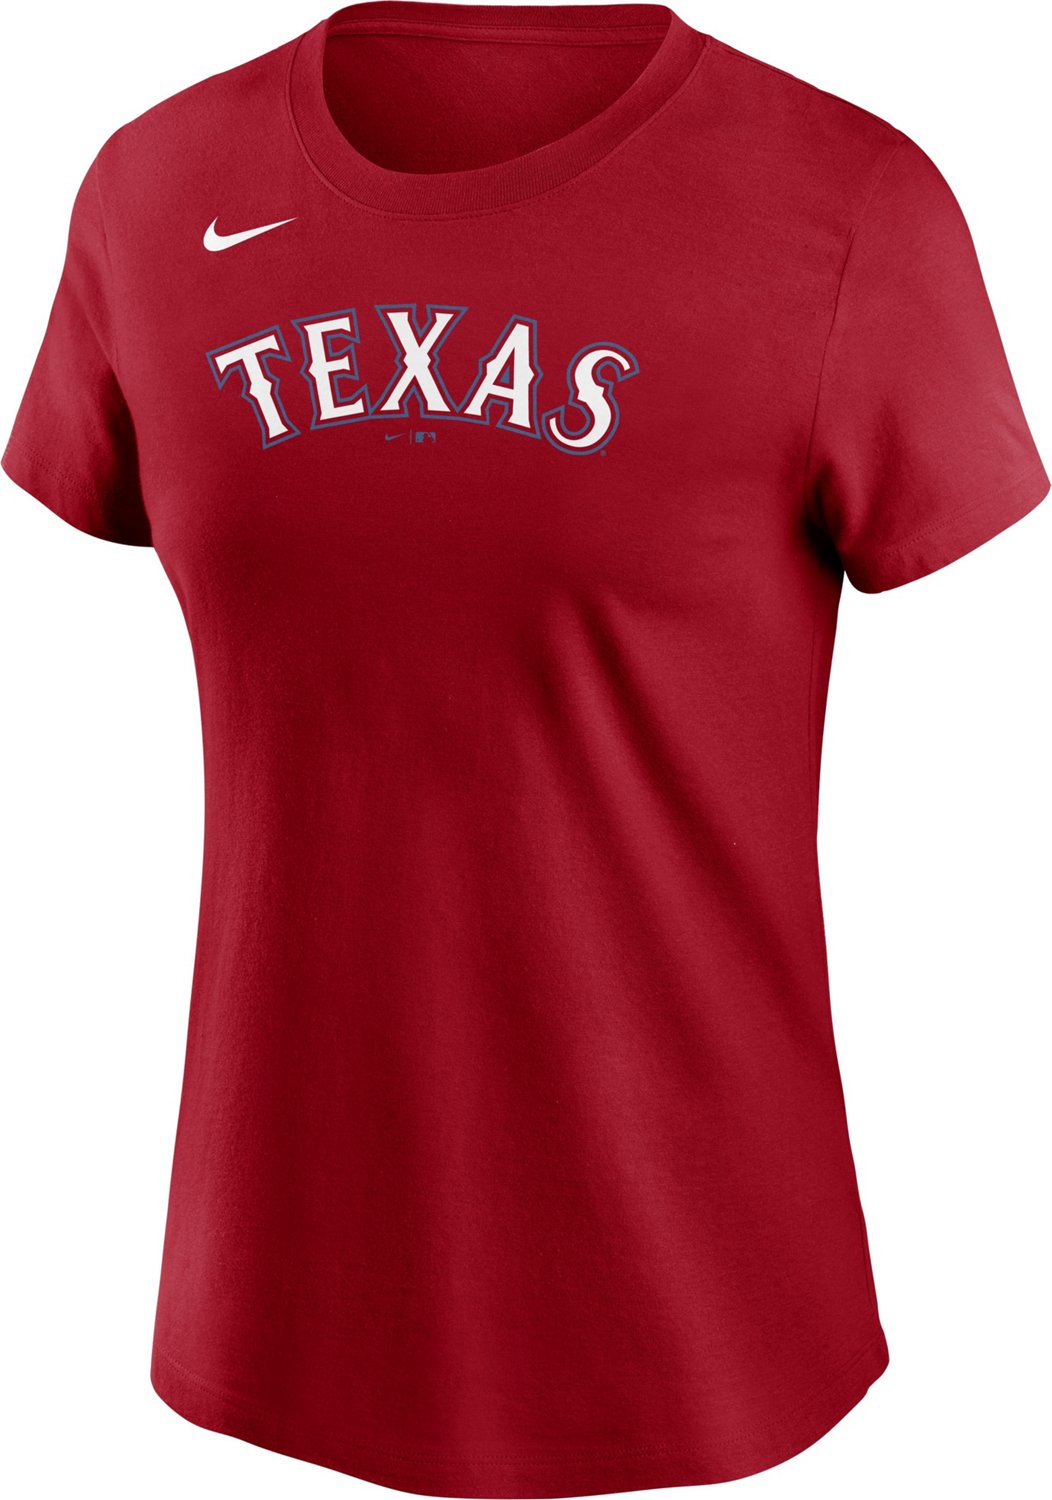 Nike Women's Texas Rangers Wordmark Short Sleeve T-shirt